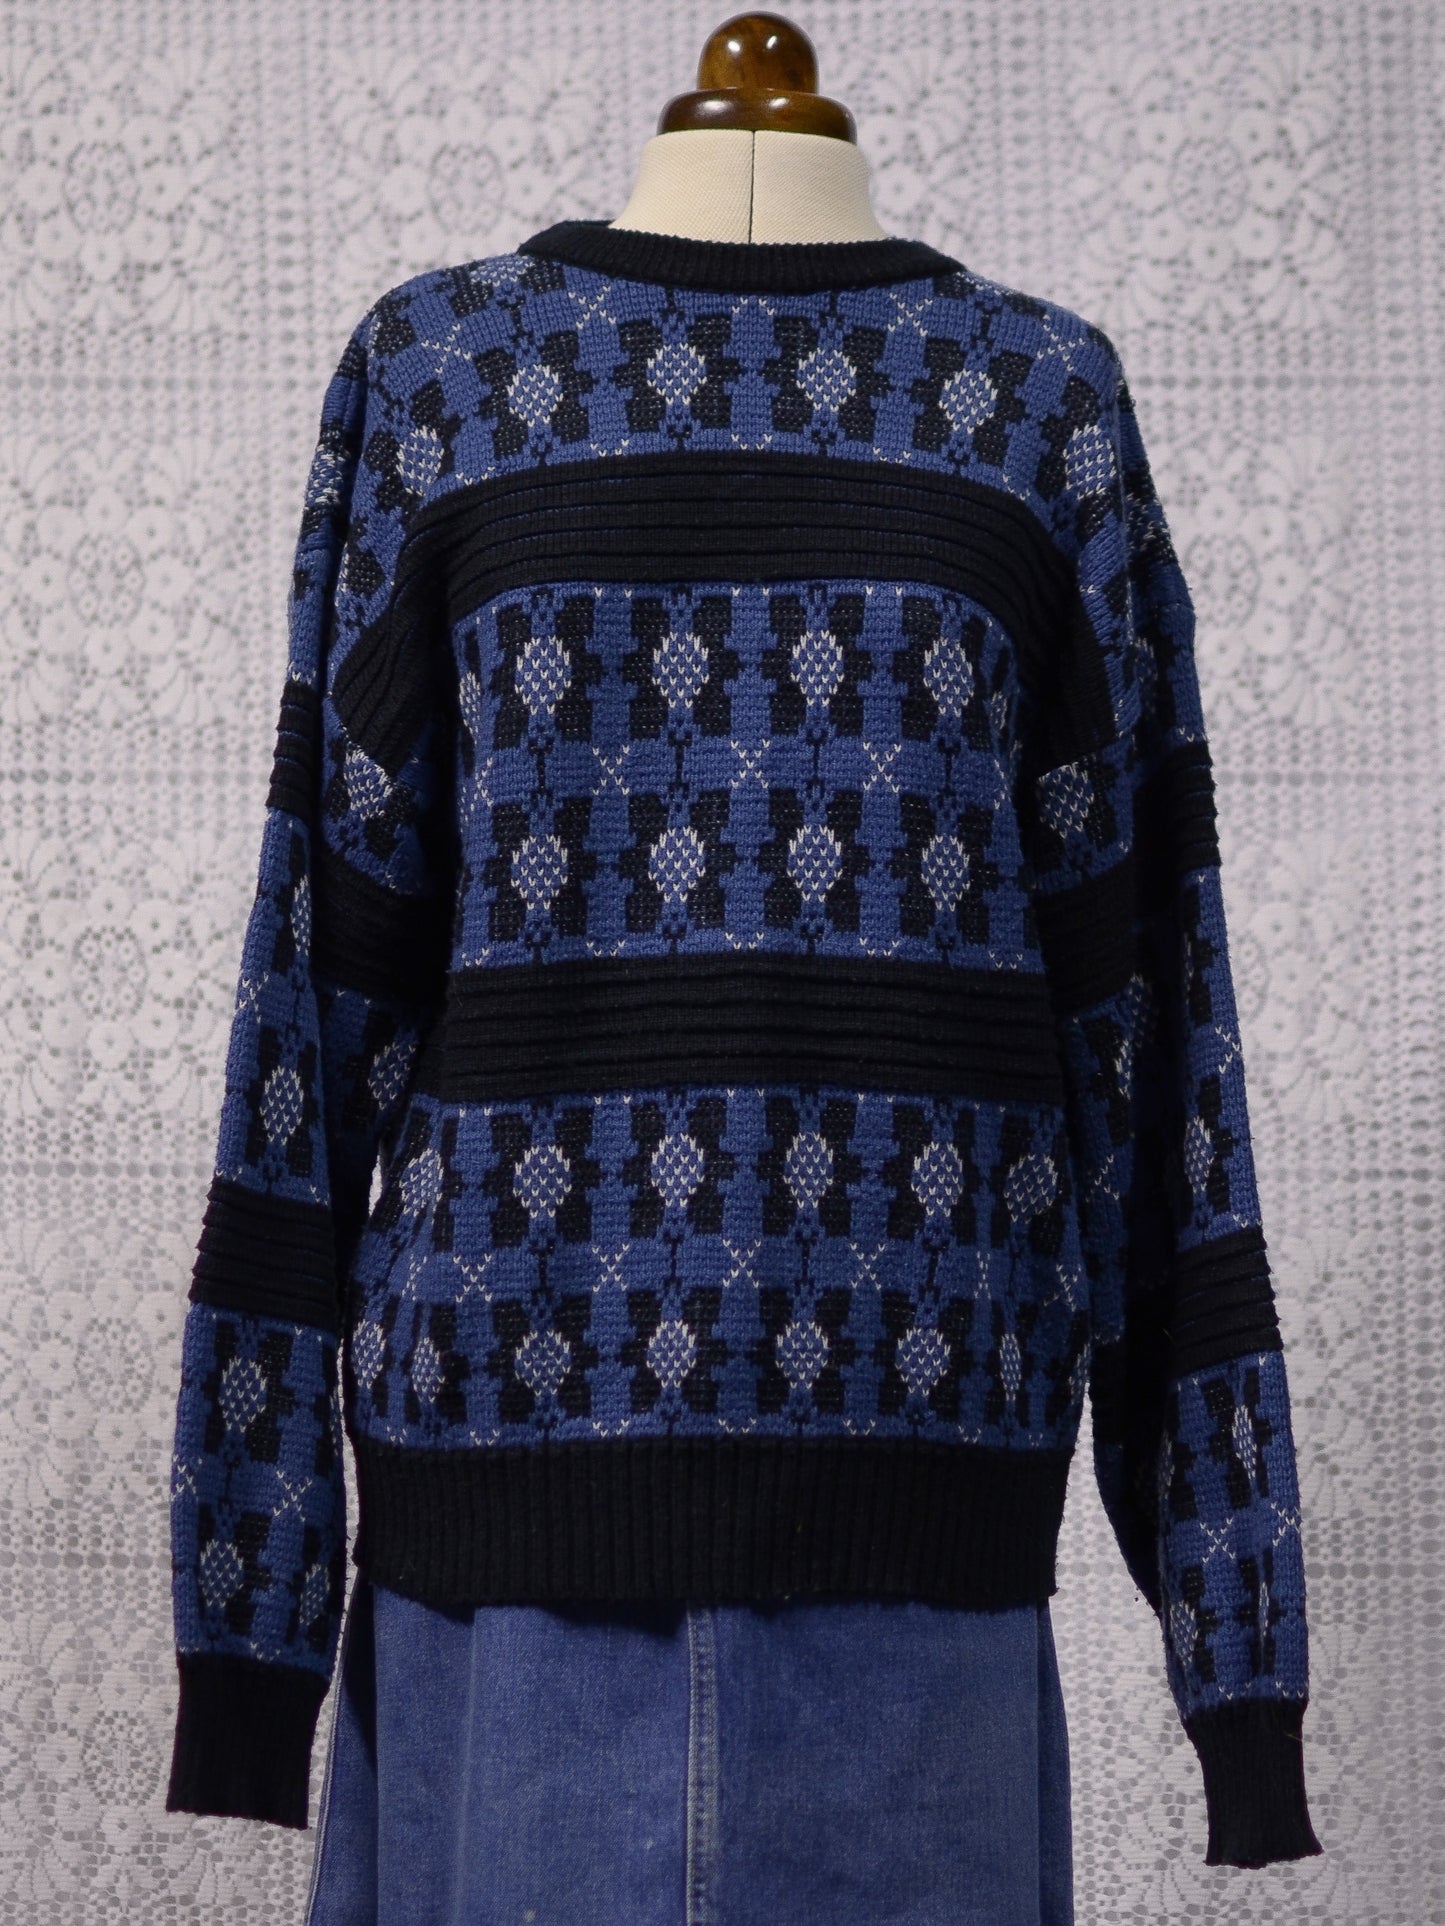 1980s blue and black geometric floral pattern jumper